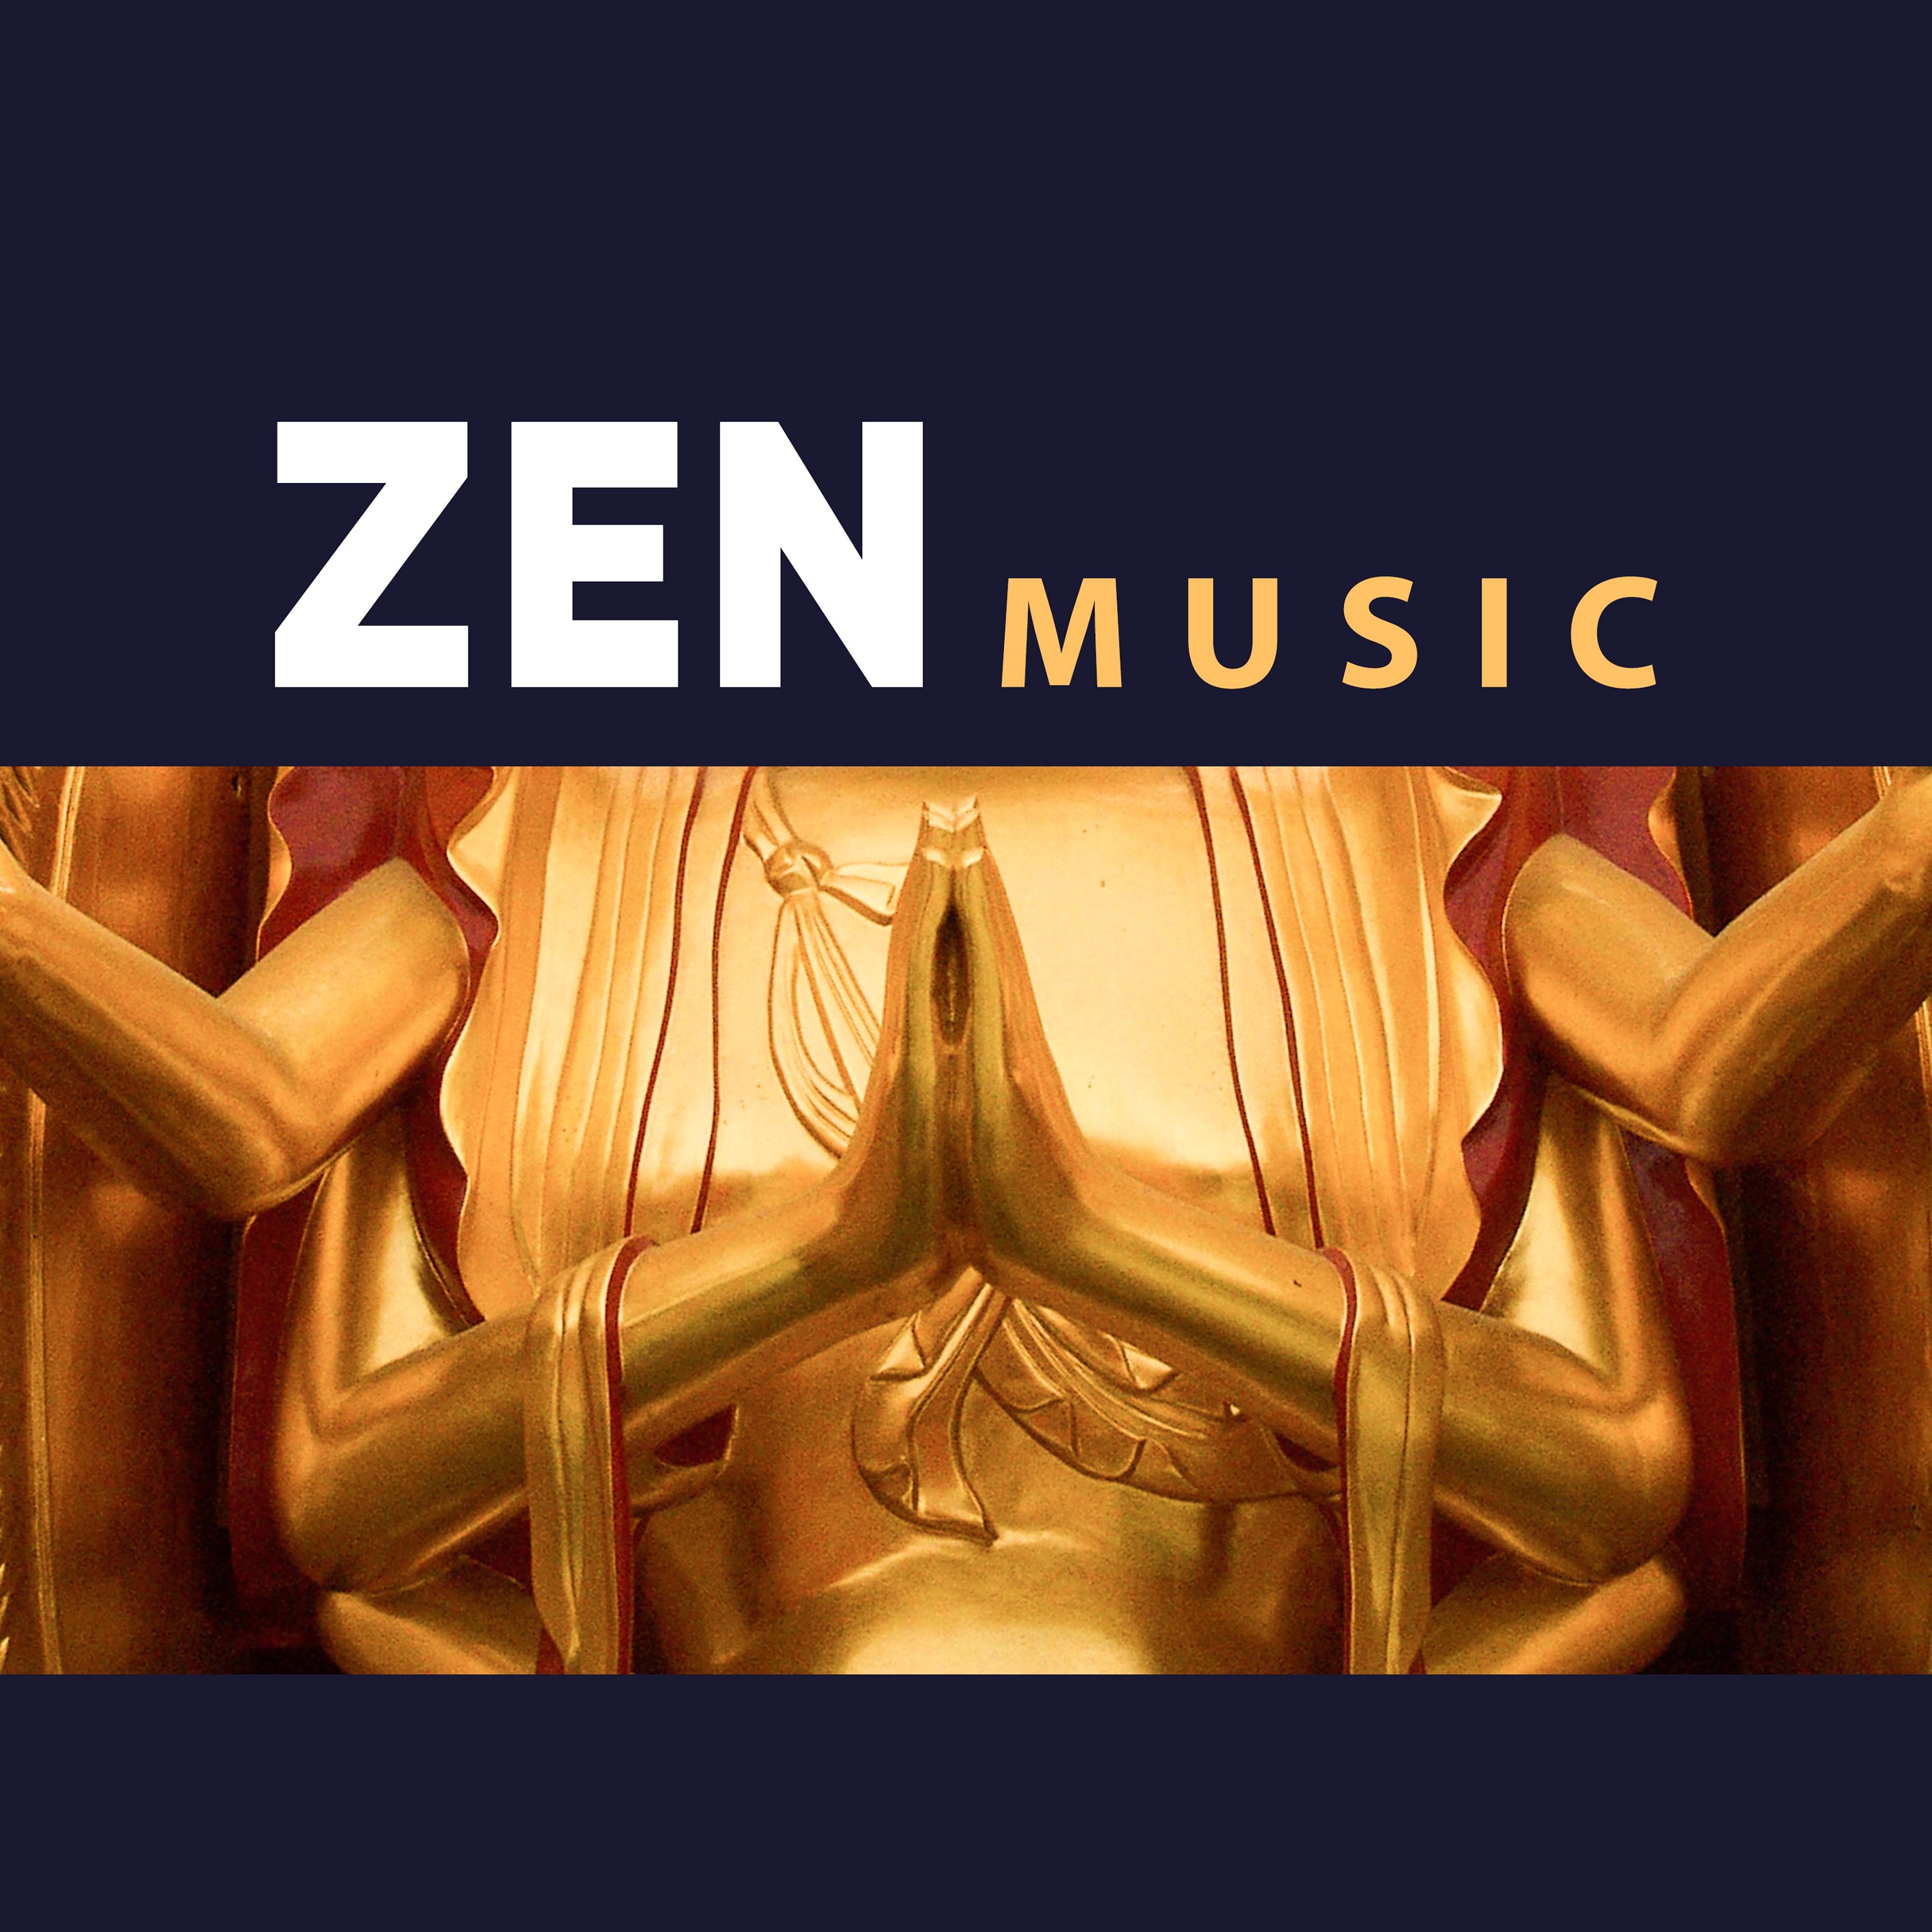 Zen Music – Exercise Yoga, Focus, Concentration, Meditation Music, Buddha Lounge, New Age, Peaceful Mind